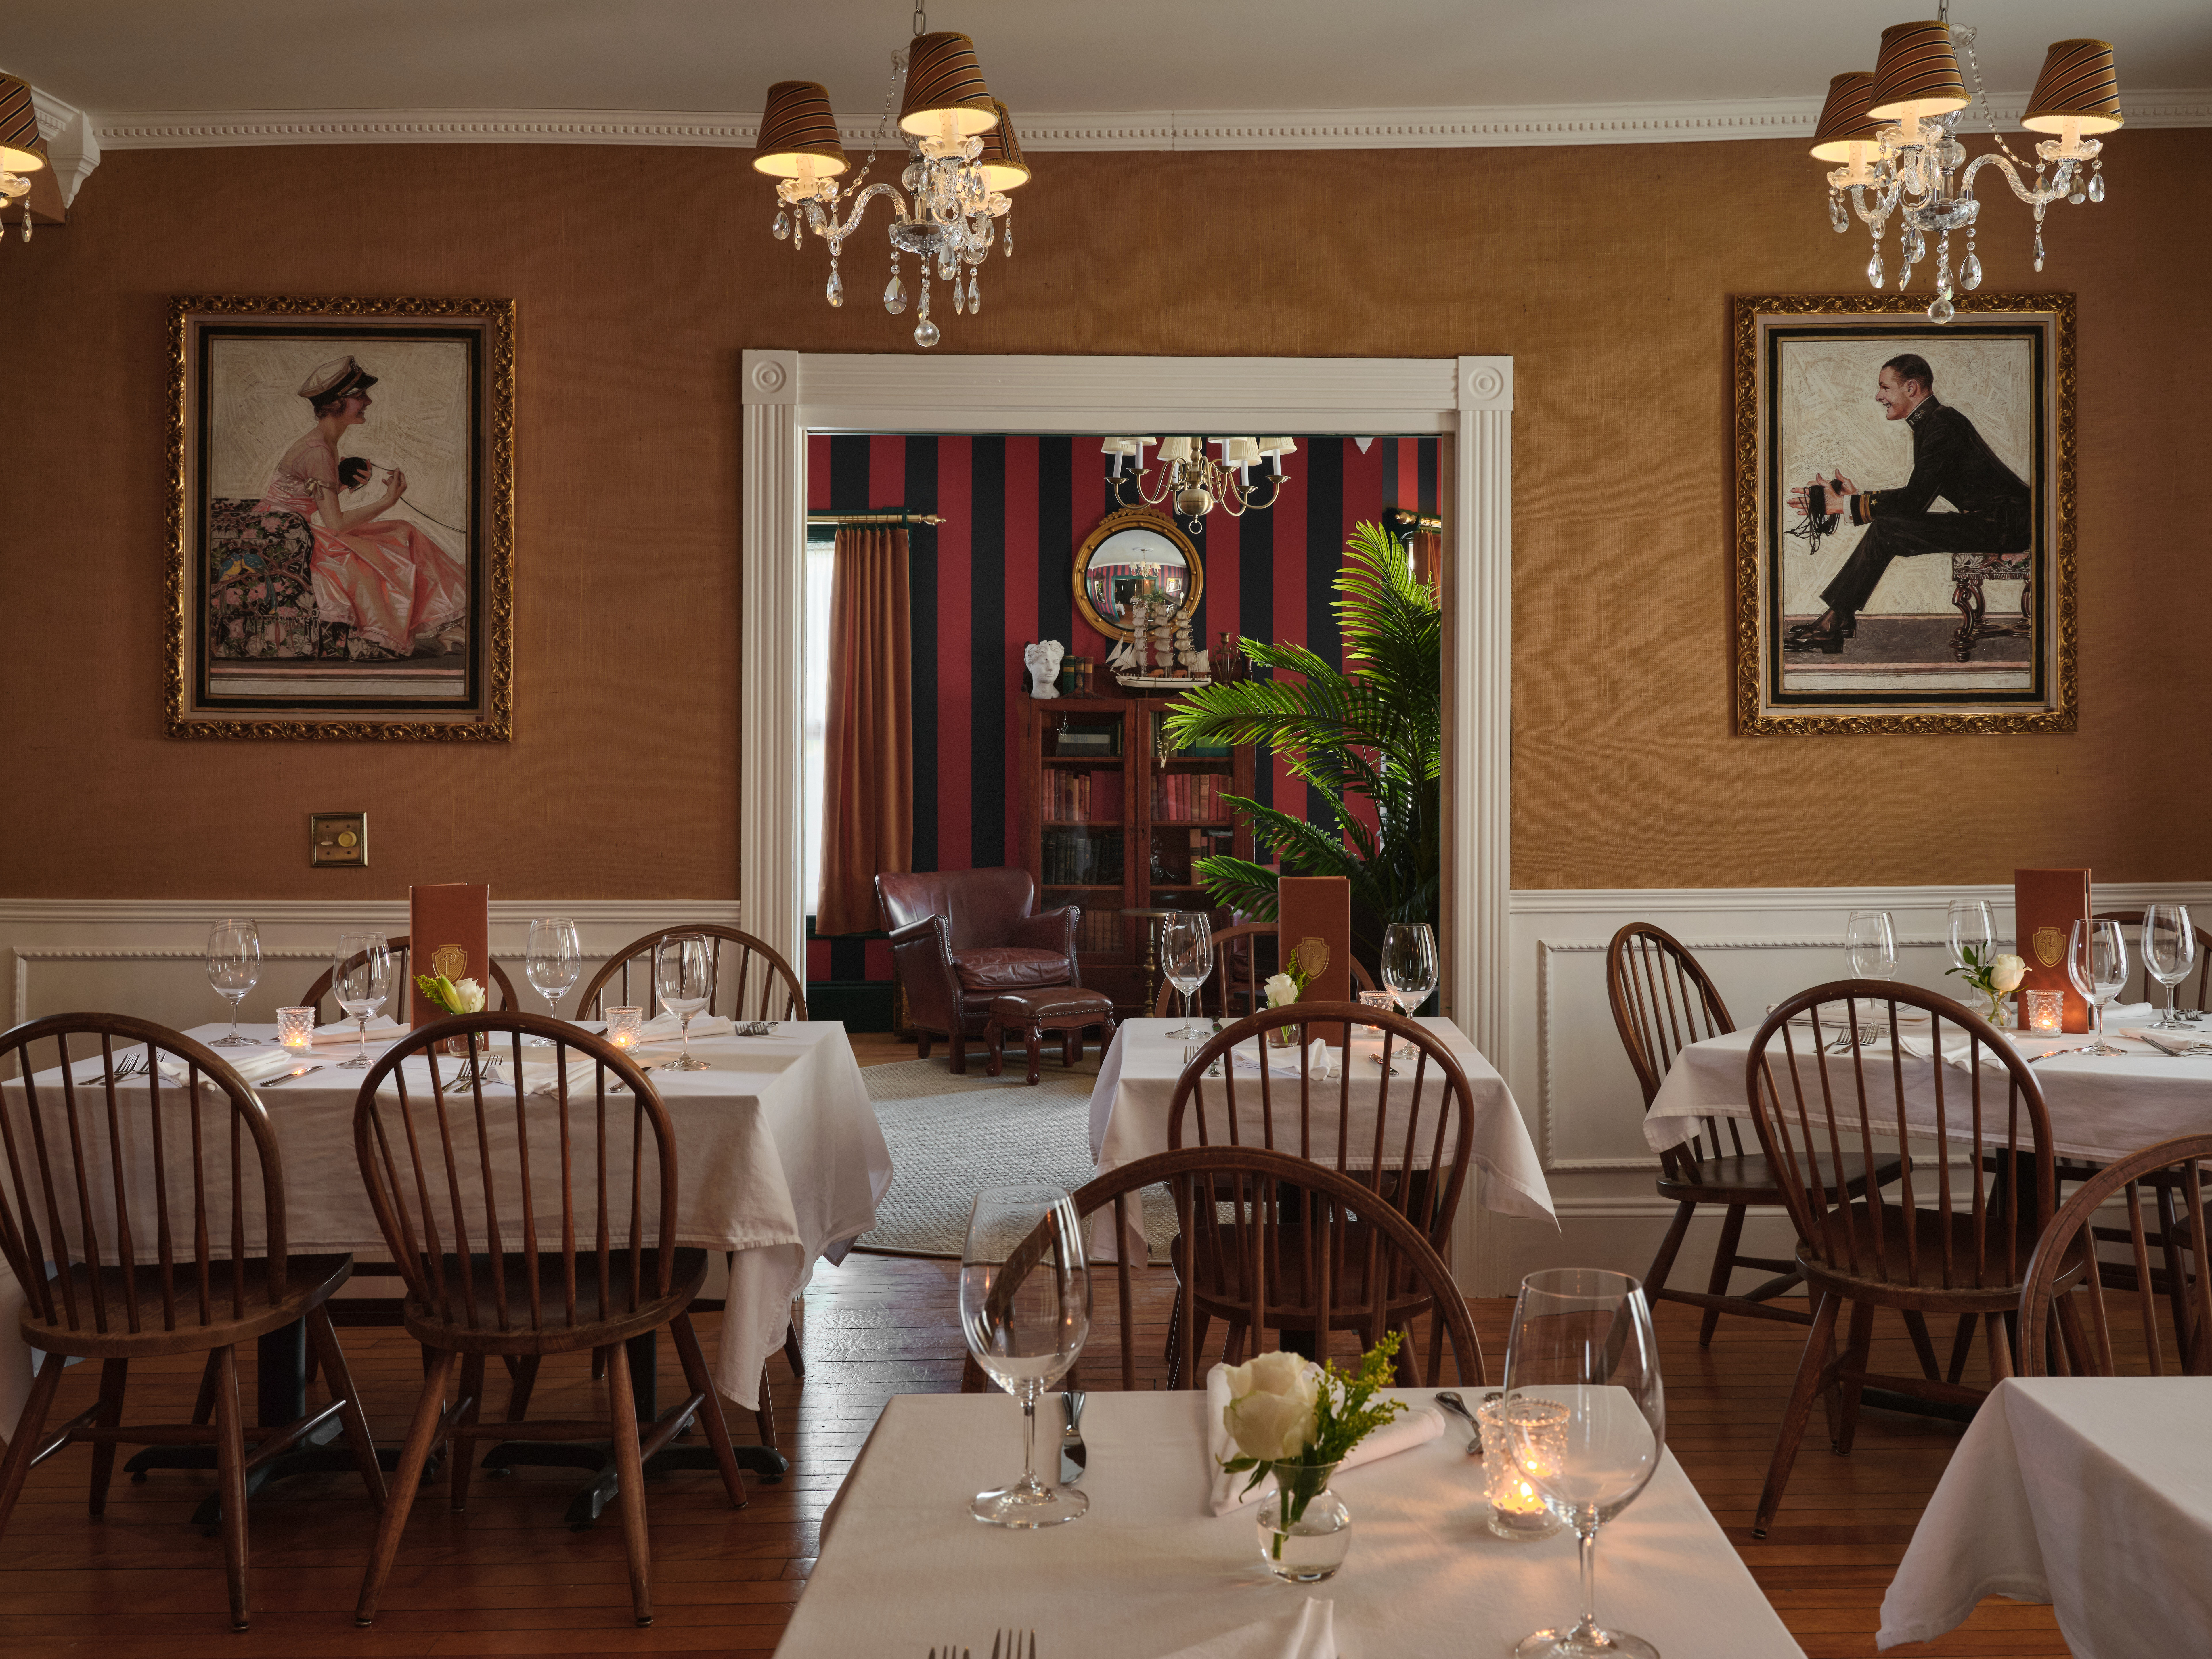 The dining room of the Pentagoet restaurant